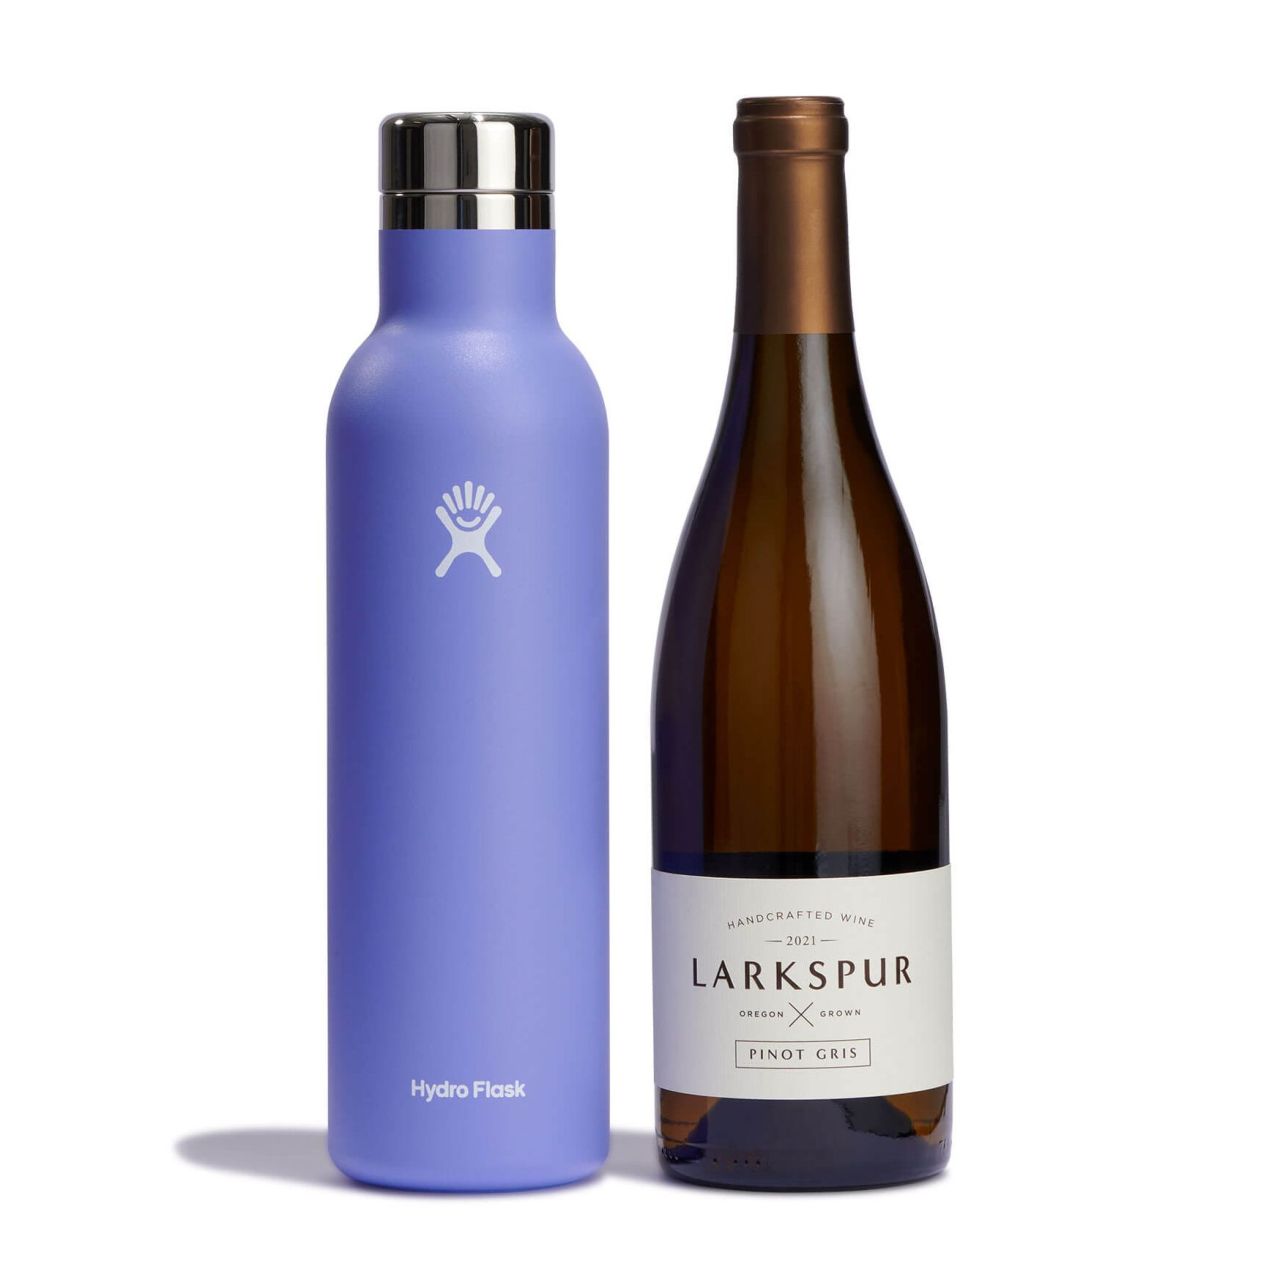 Hydro Flask 25 oz Ceramic Wine Bottle Lupine